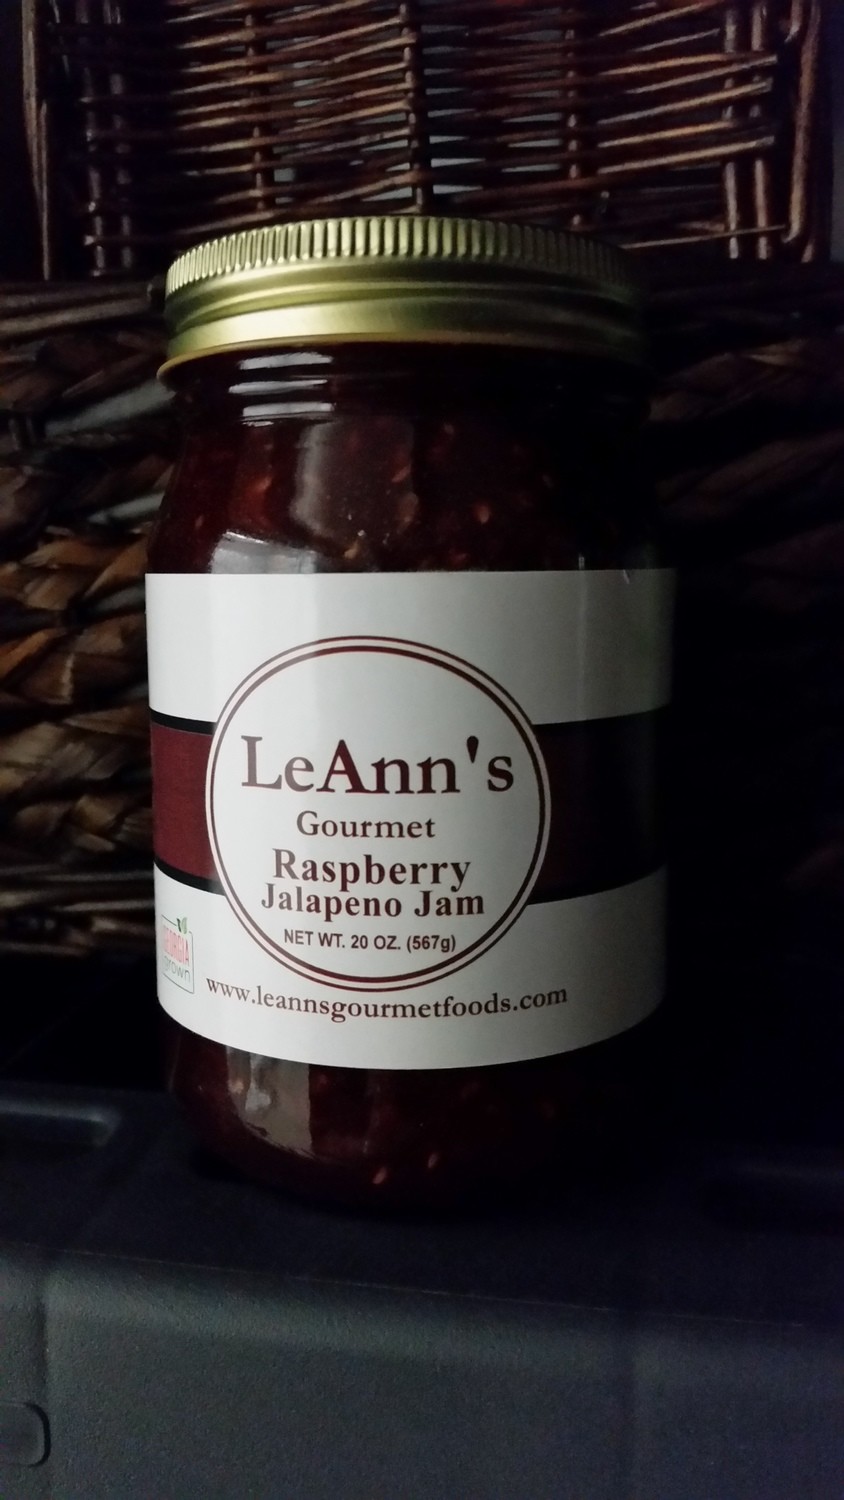 LeAnn's Gourmet Raspberry Jalapeno Jam